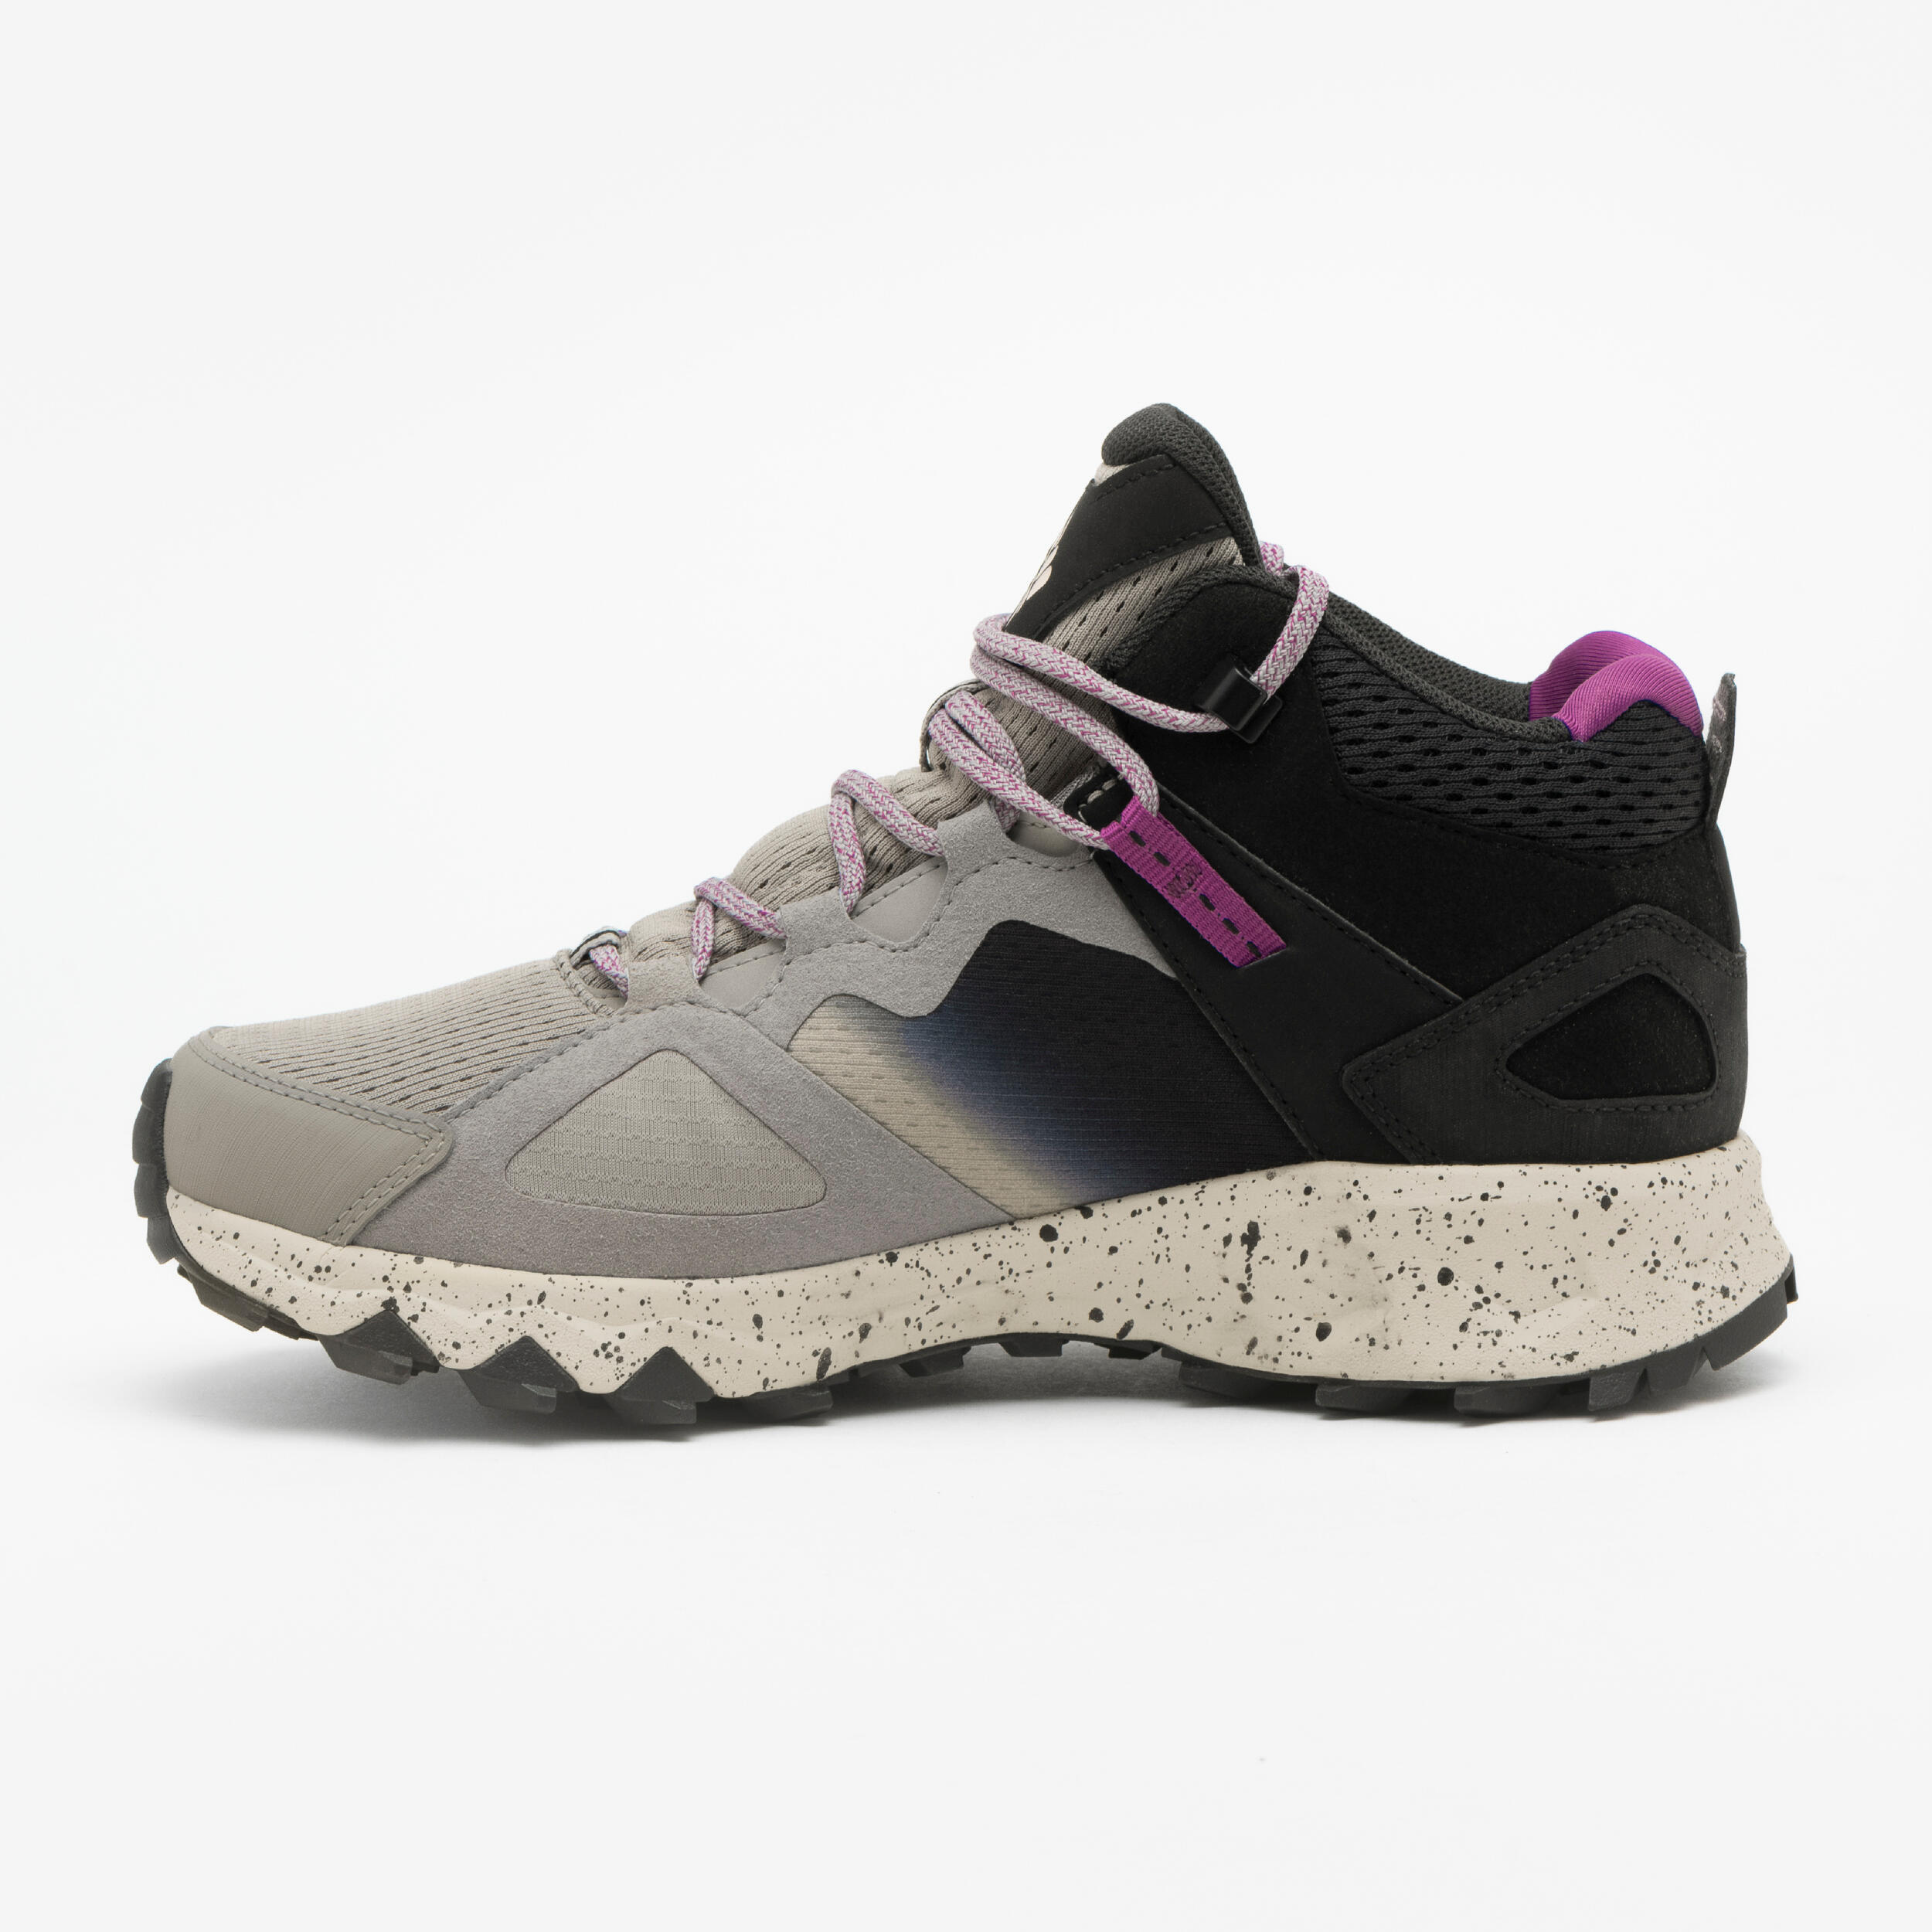 Women's Hiking Waterproof Shoes - Columbia Hera Mid Outdry 2/4